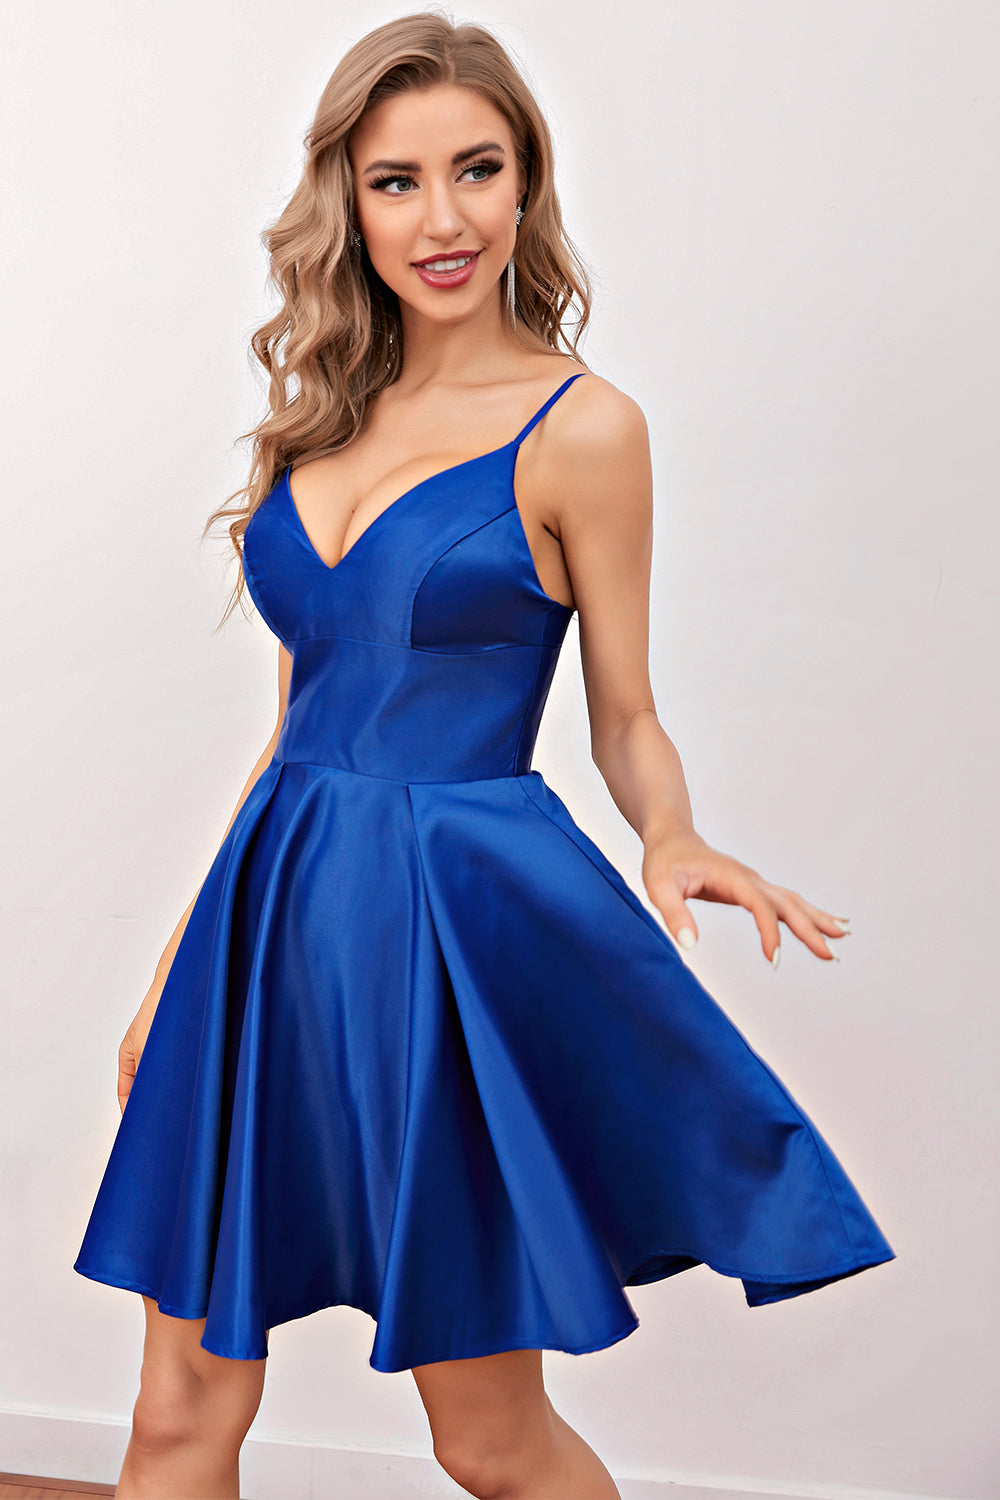 Zapaka Women Royal Blue Short Prom Dress Spaghetti Straps Backless ...